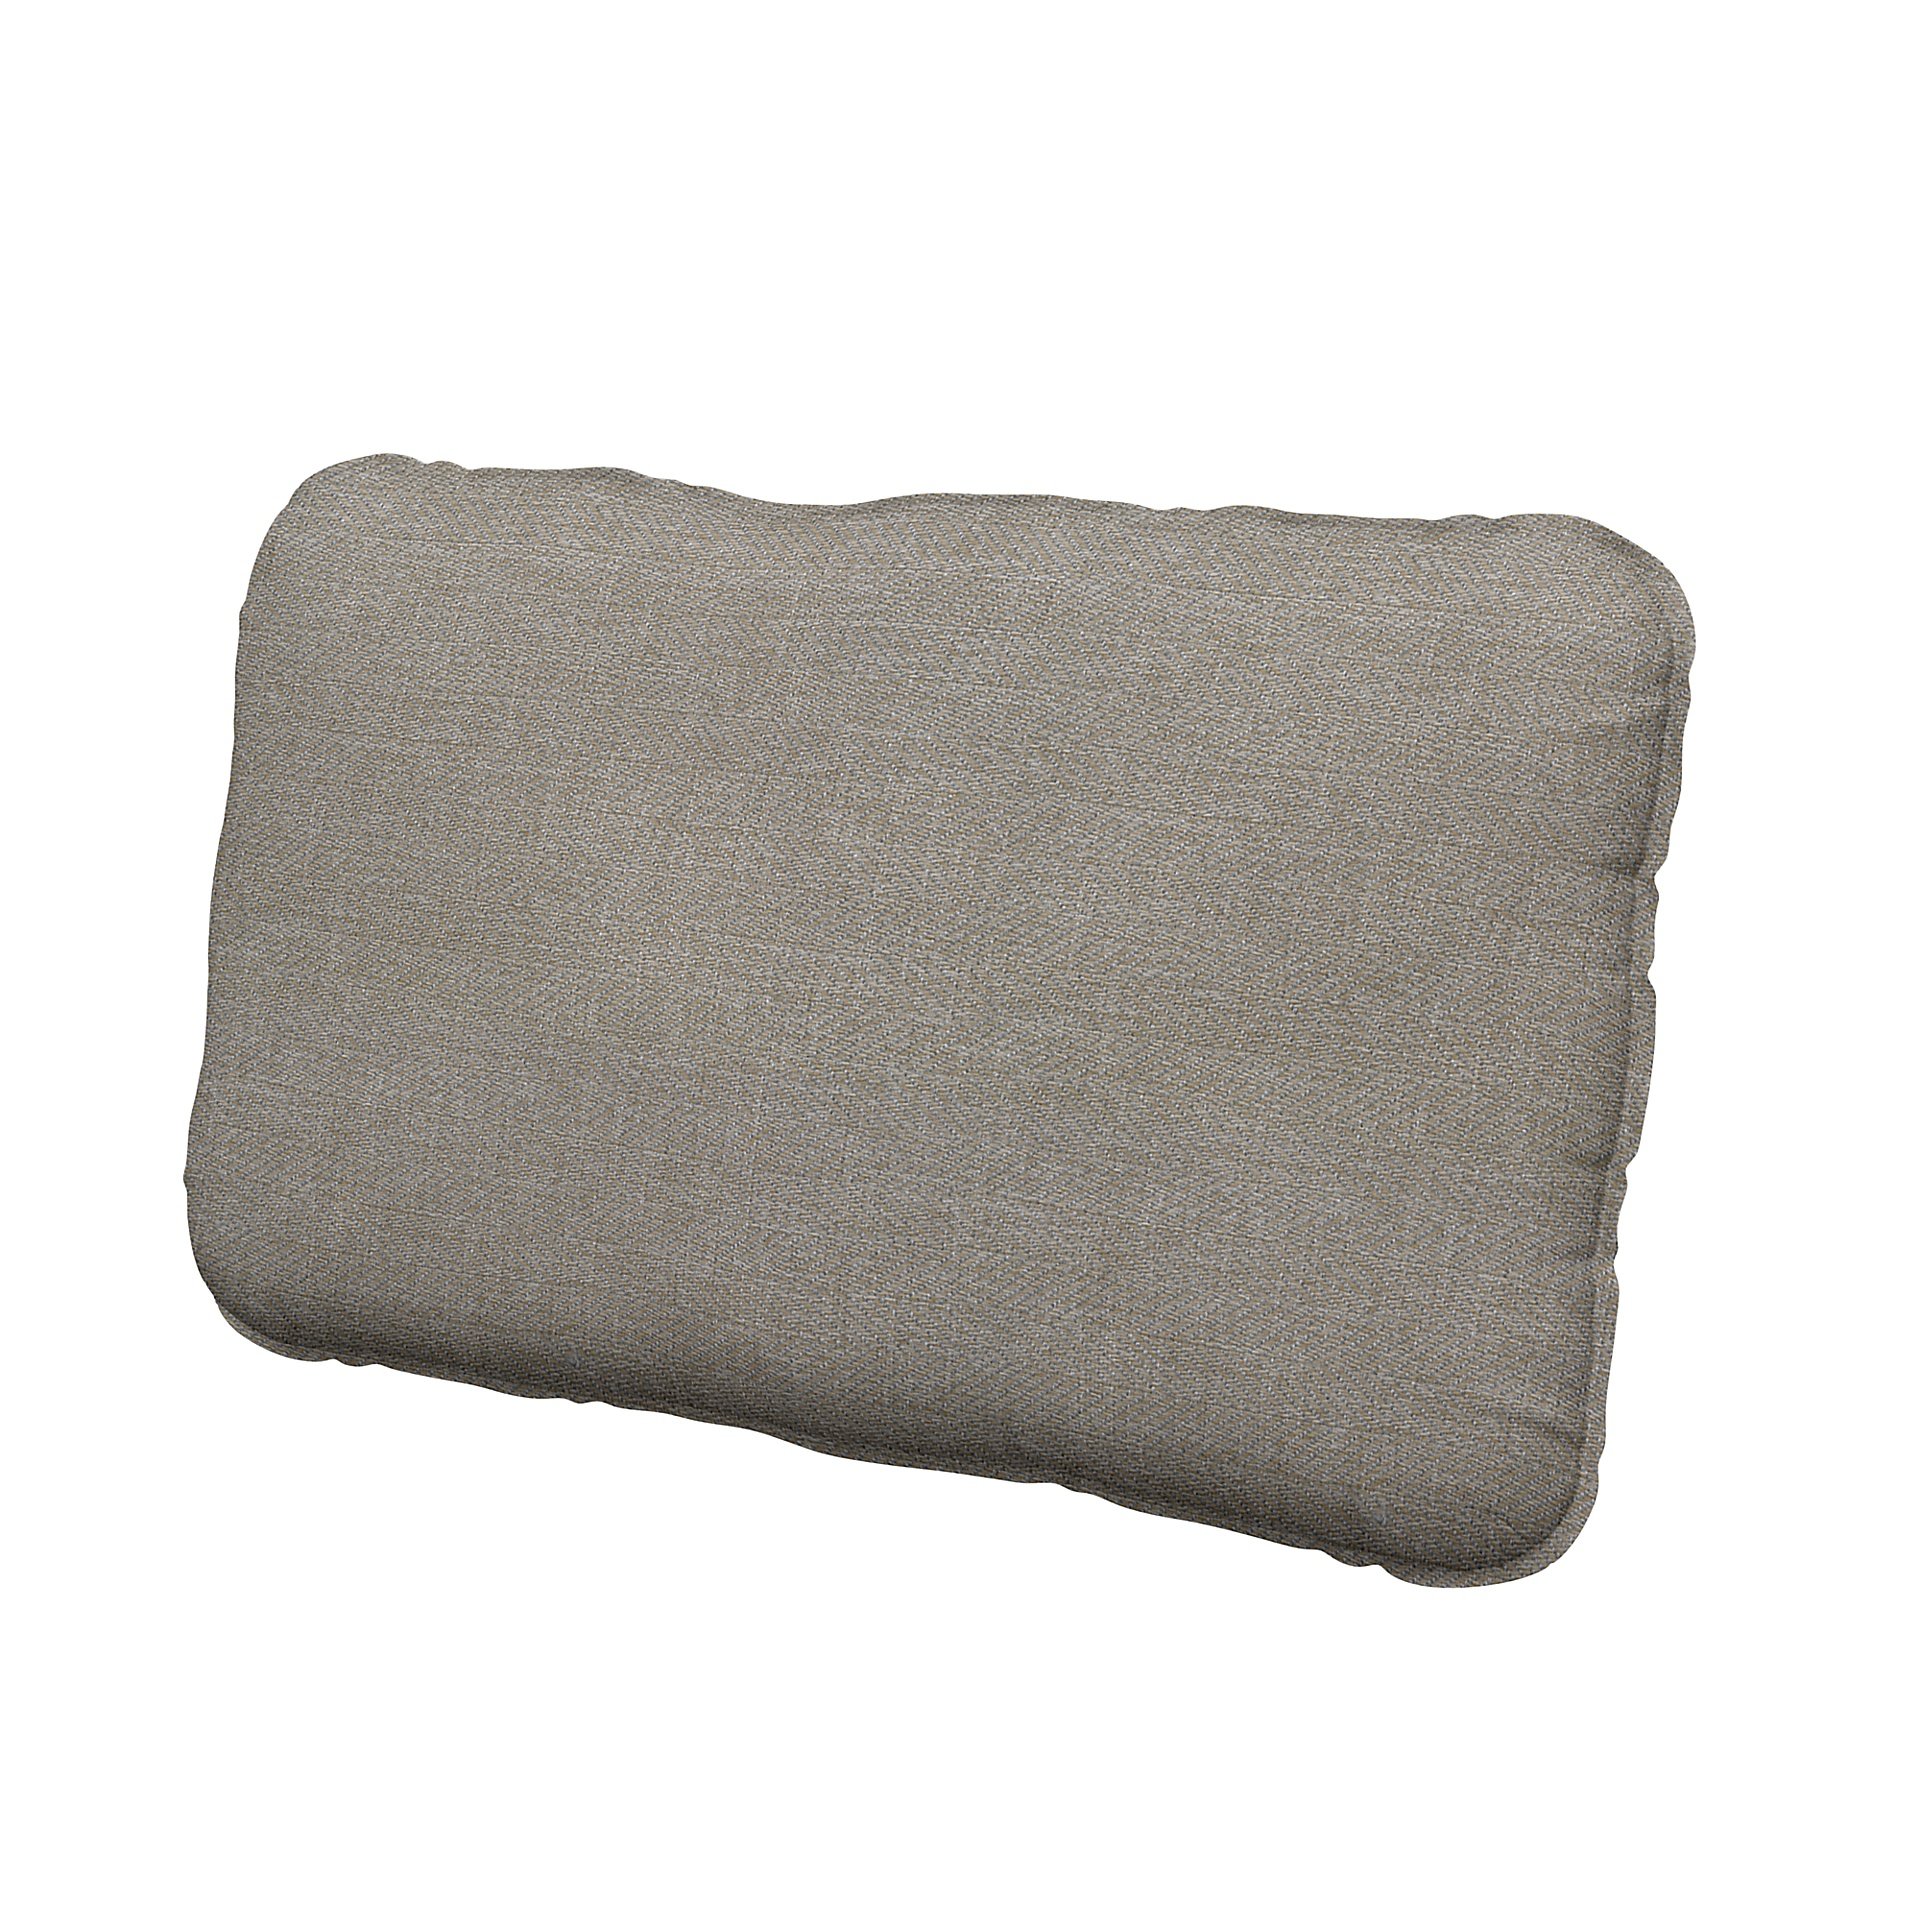 IKEA - Vallentuna back cushion cover 40x75cm, Greige, Boucle & Texture - Bemz